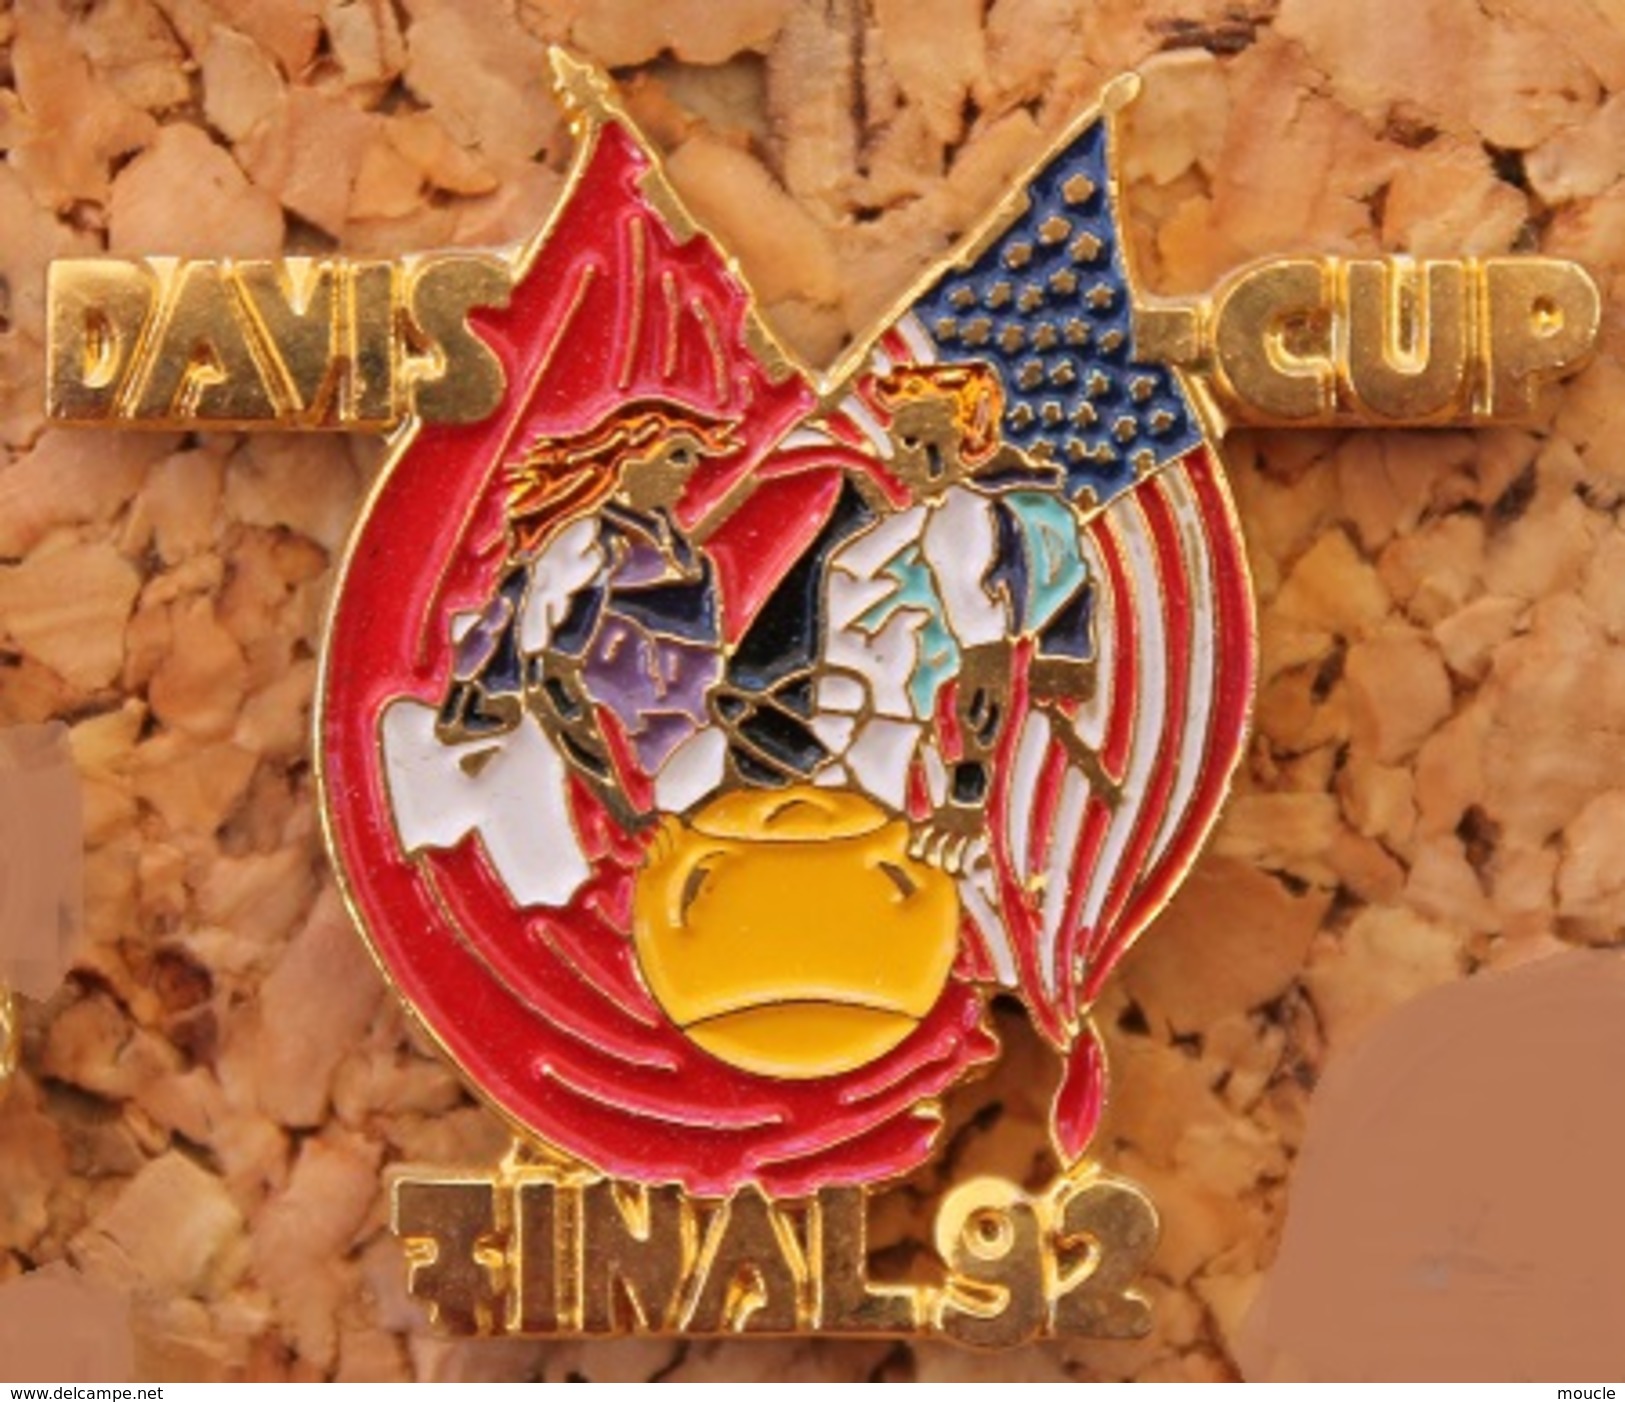 FINAL COUPE DAVIS 1992 - TENNIS - SUISSE / USA - BALLE - DAVIS CUP -      (13) - Tennis